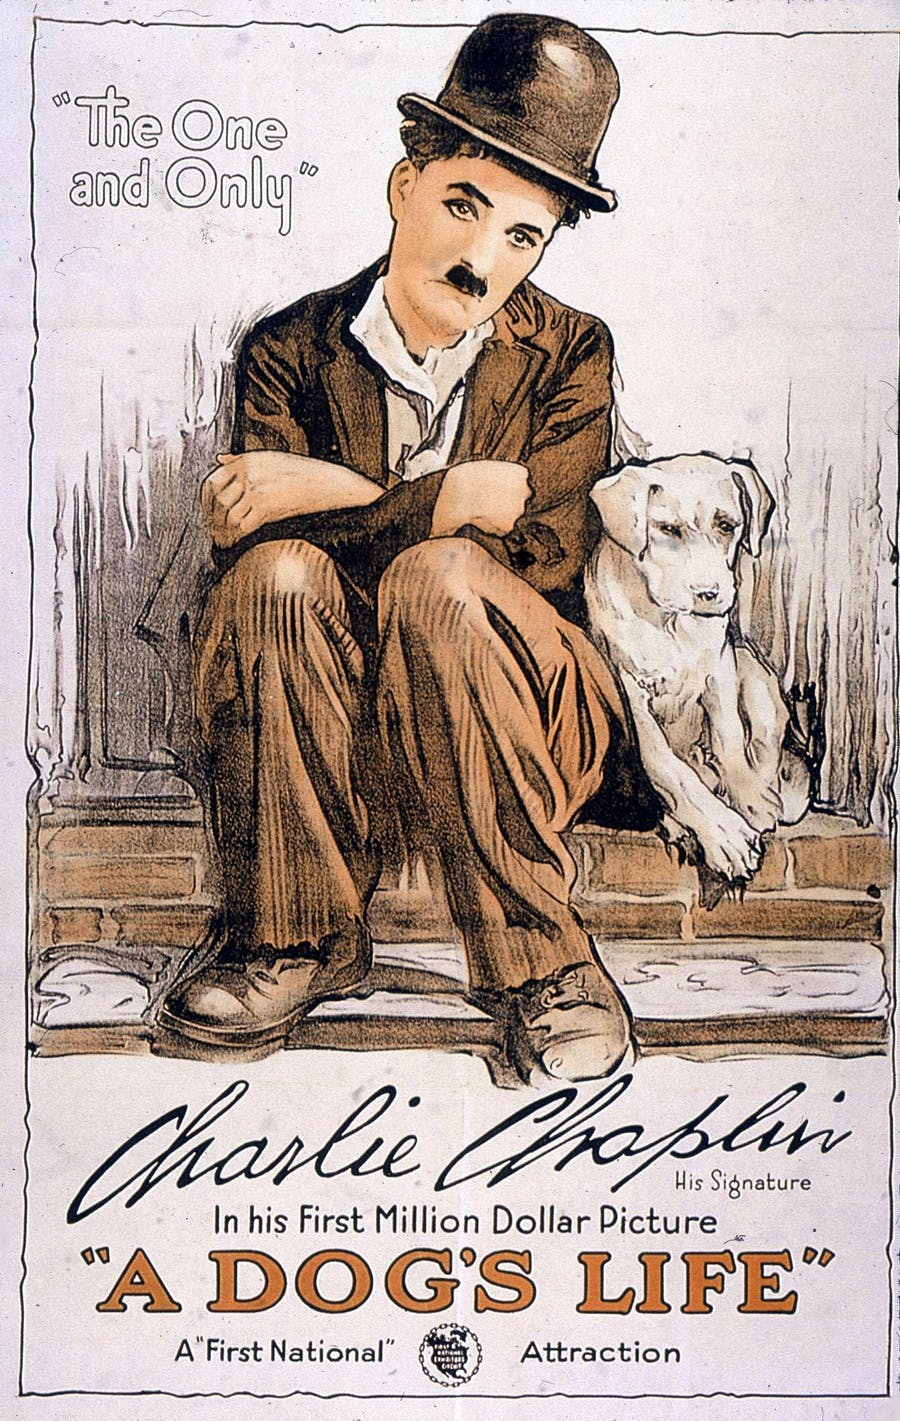 Charlie Chaplin's Movie Poster 'Dog's Life' (1918). Photo public domain